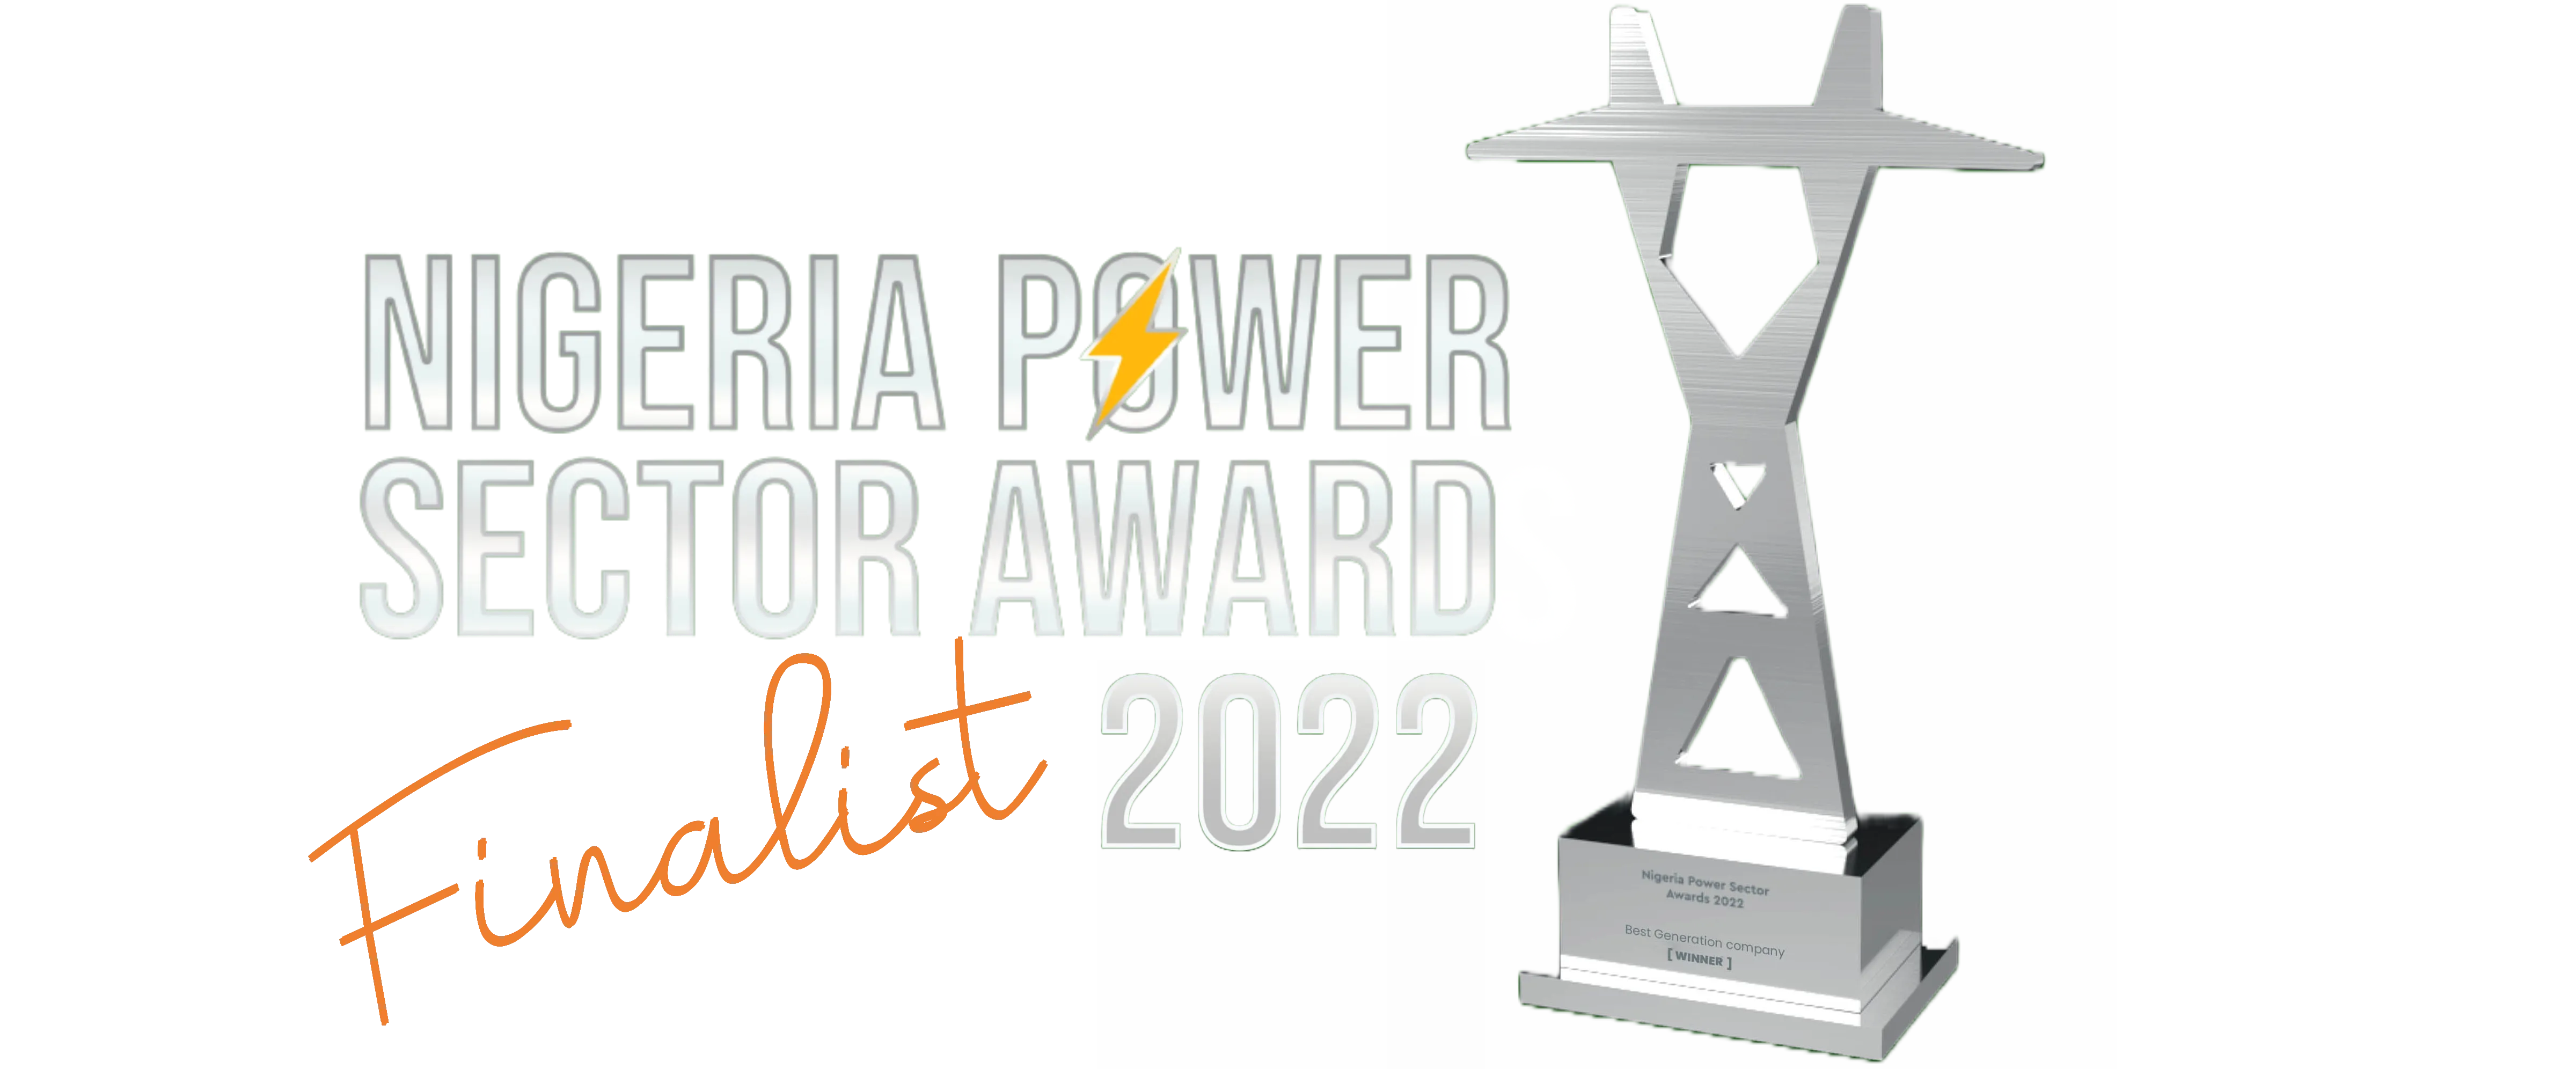 Nigerian Power Sector Award 2022 Finalist 5 best metering companies of the year